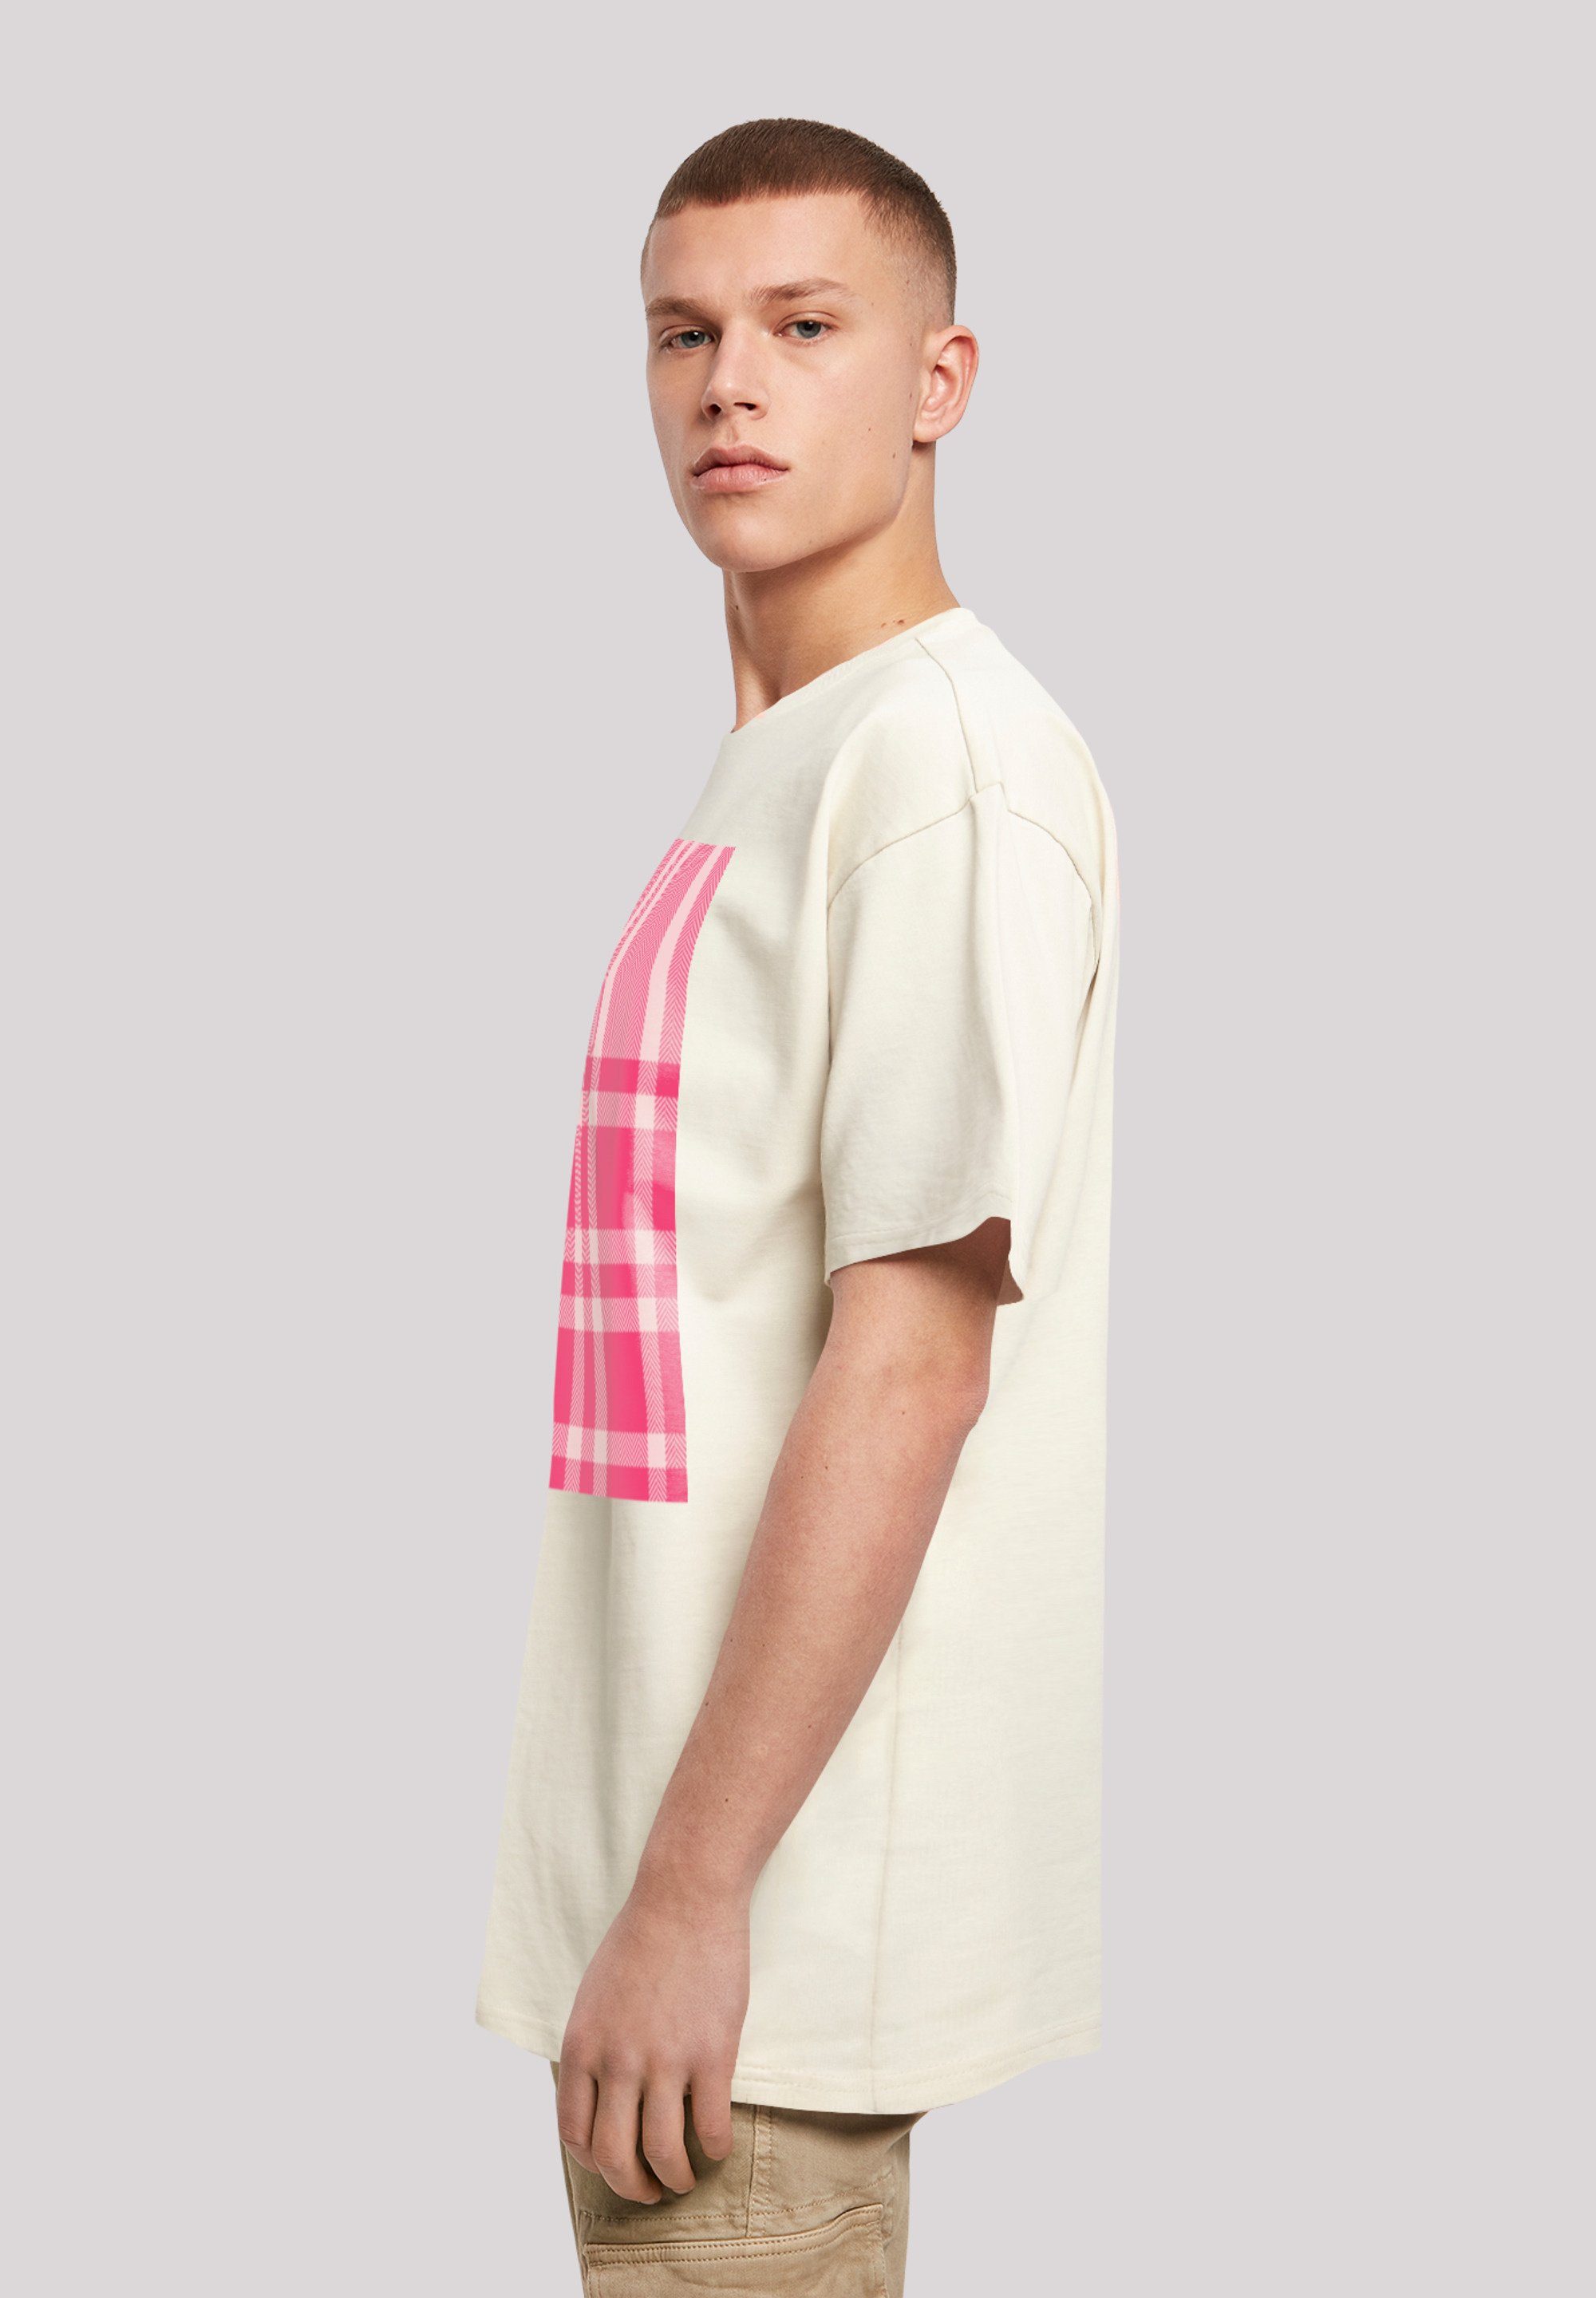 F4NT4STIC T-Shirt Karo Print Pink sand